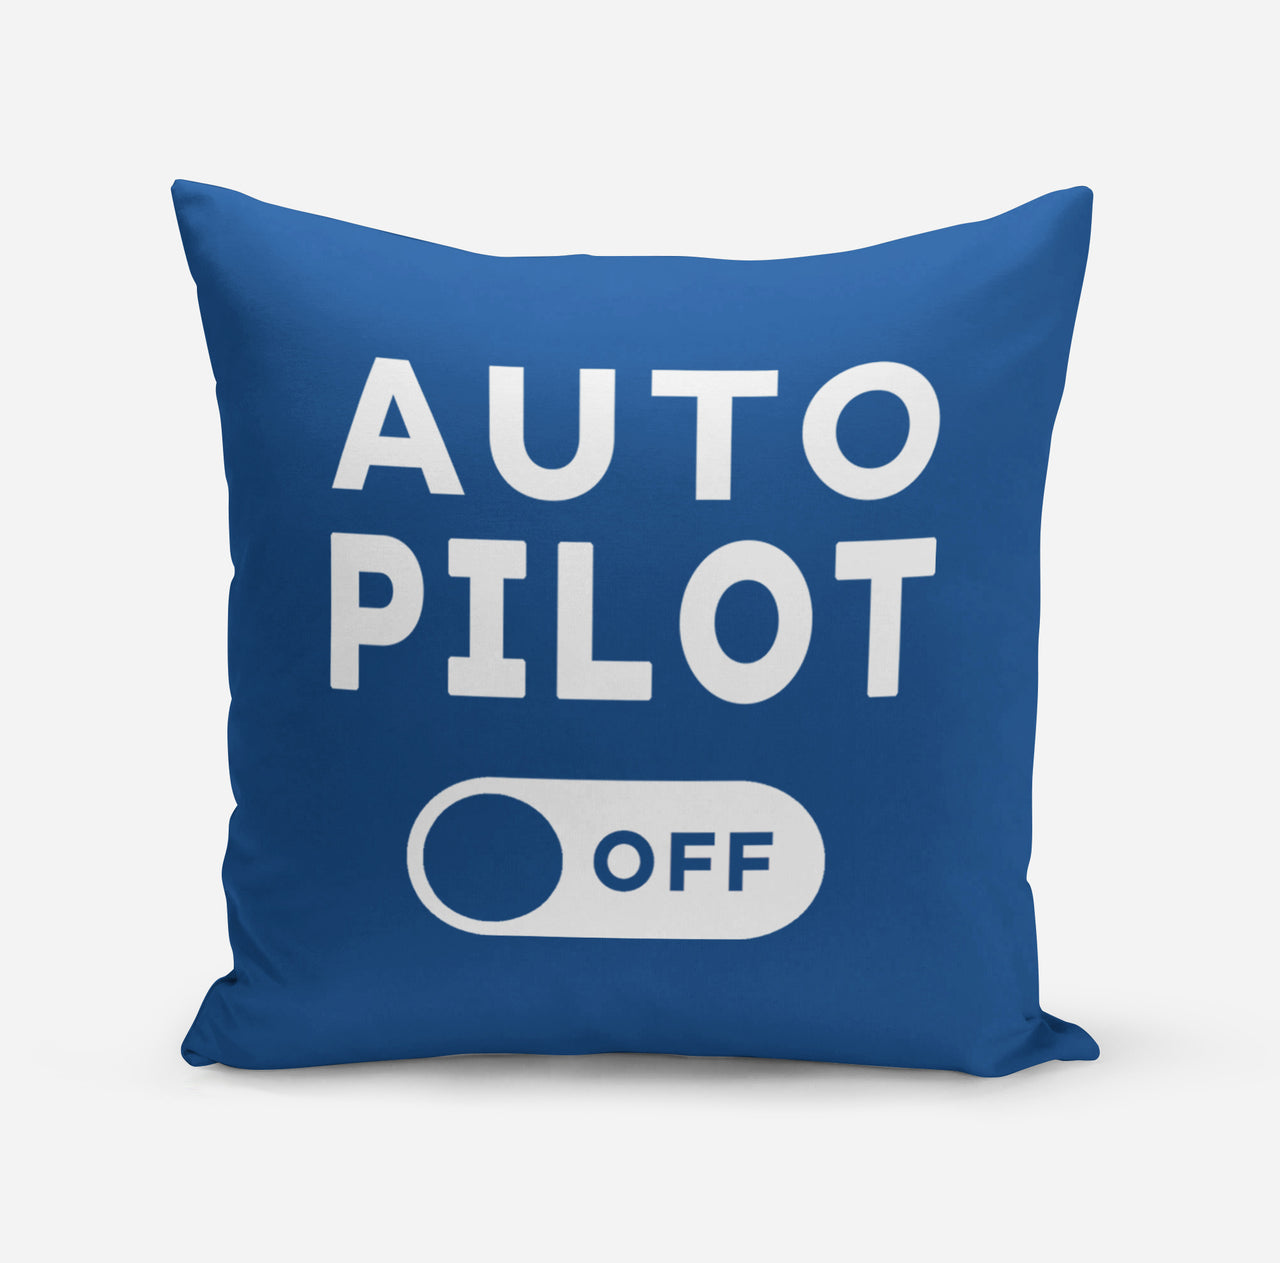 Auto Pilot Off Designed Pillows